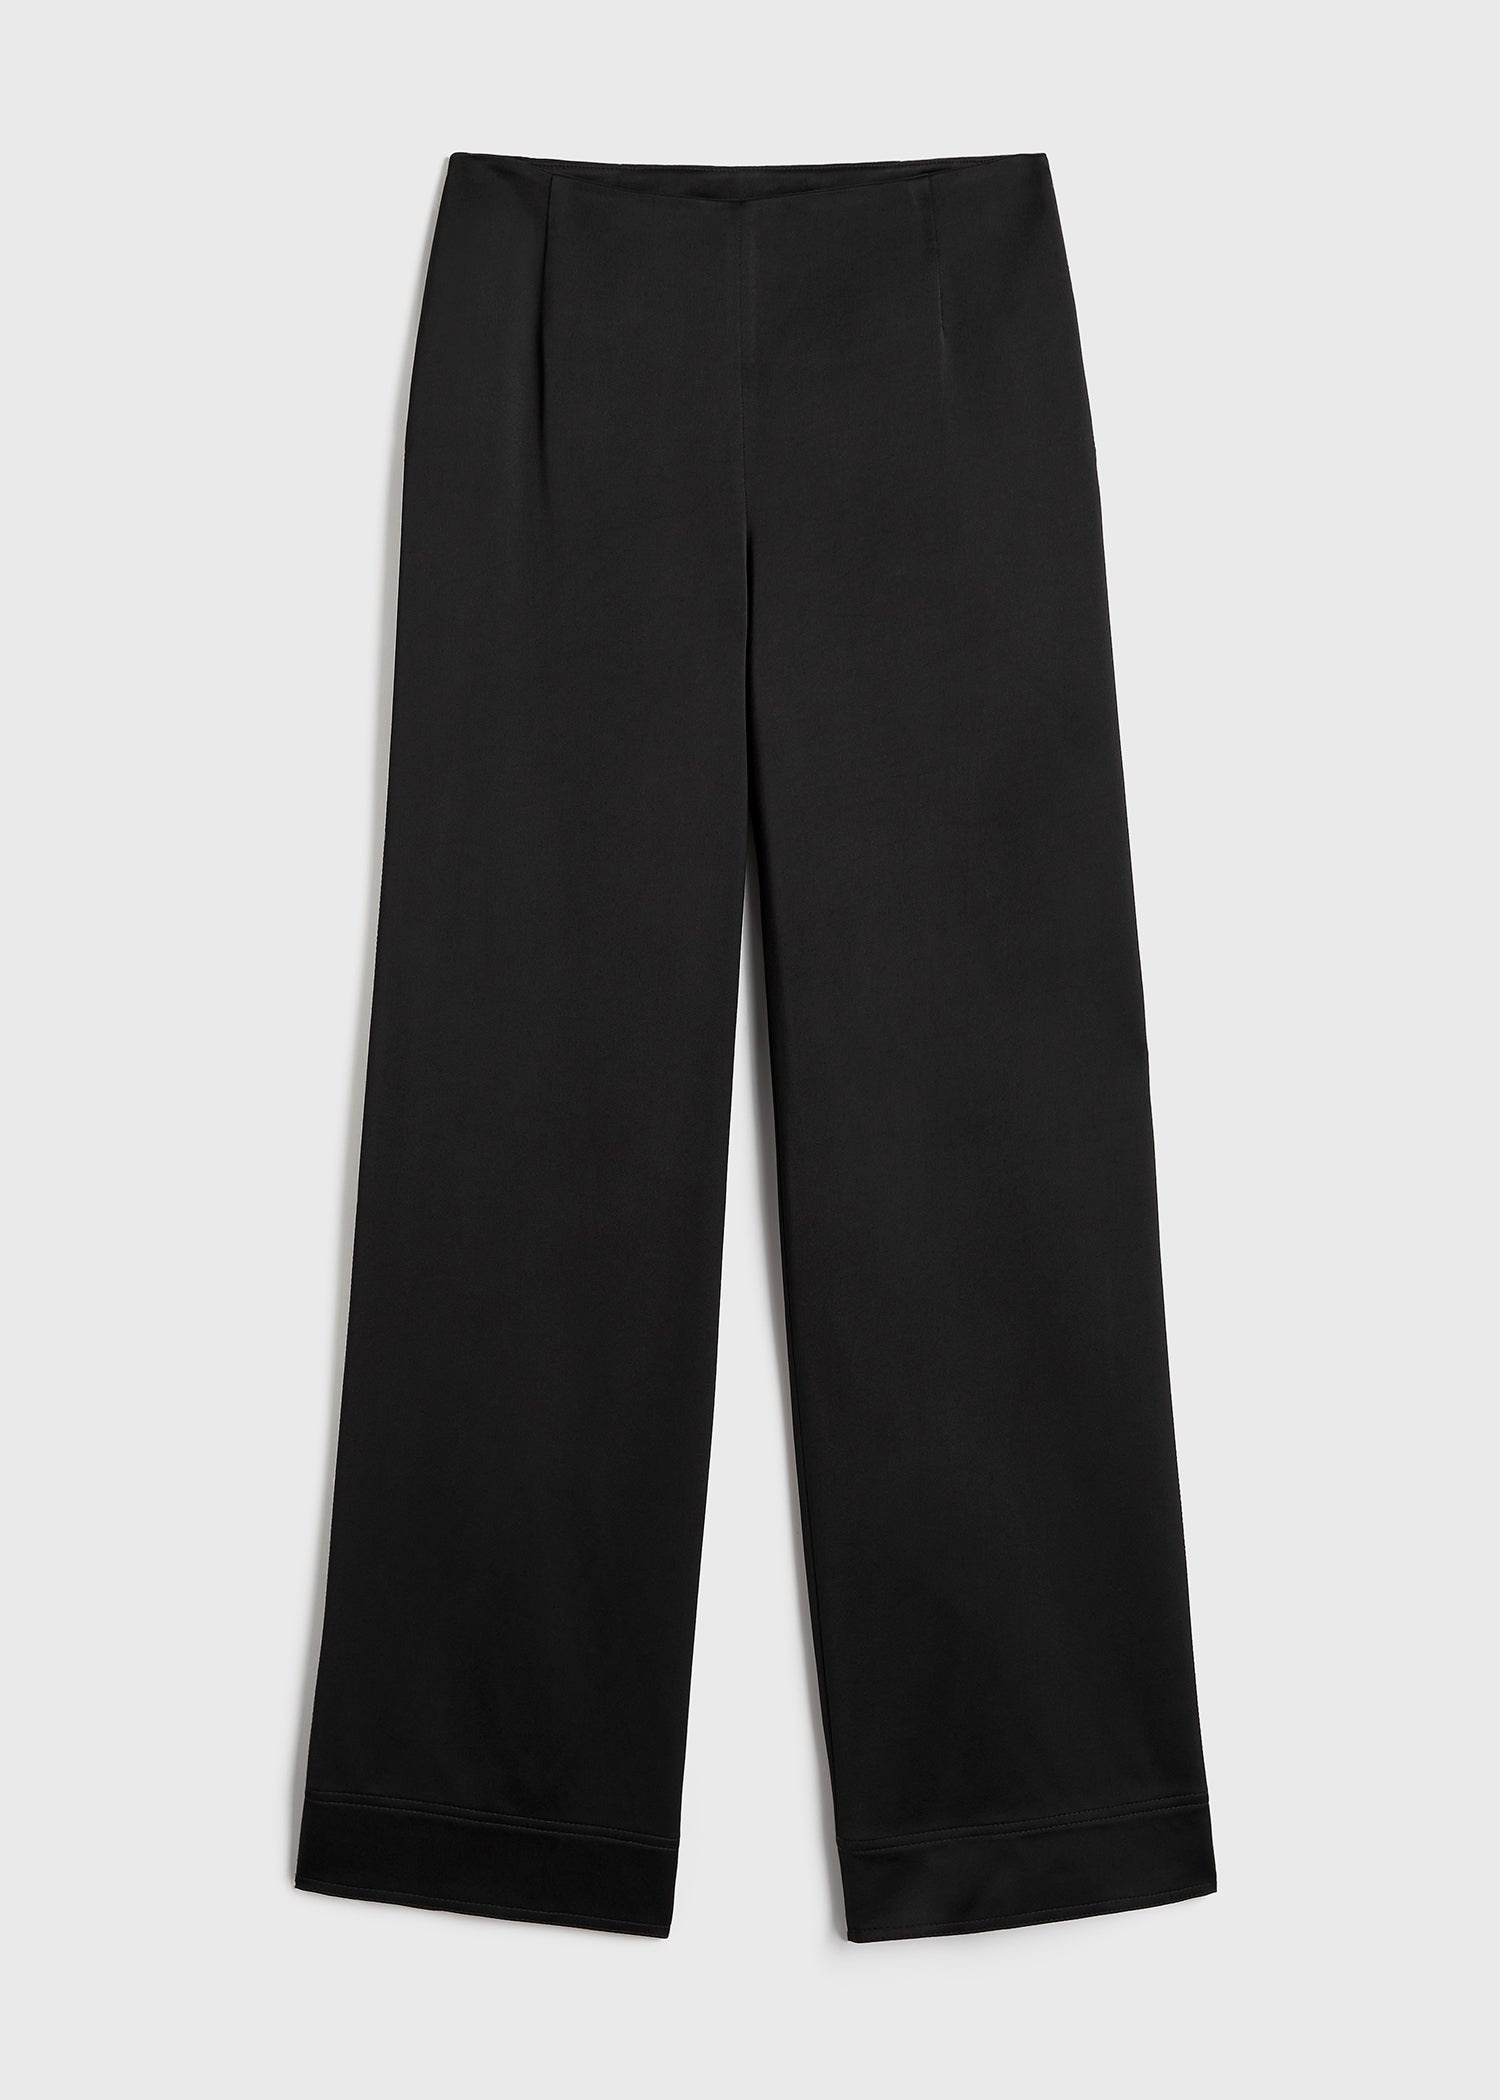 Contrast satin trousers black - 1